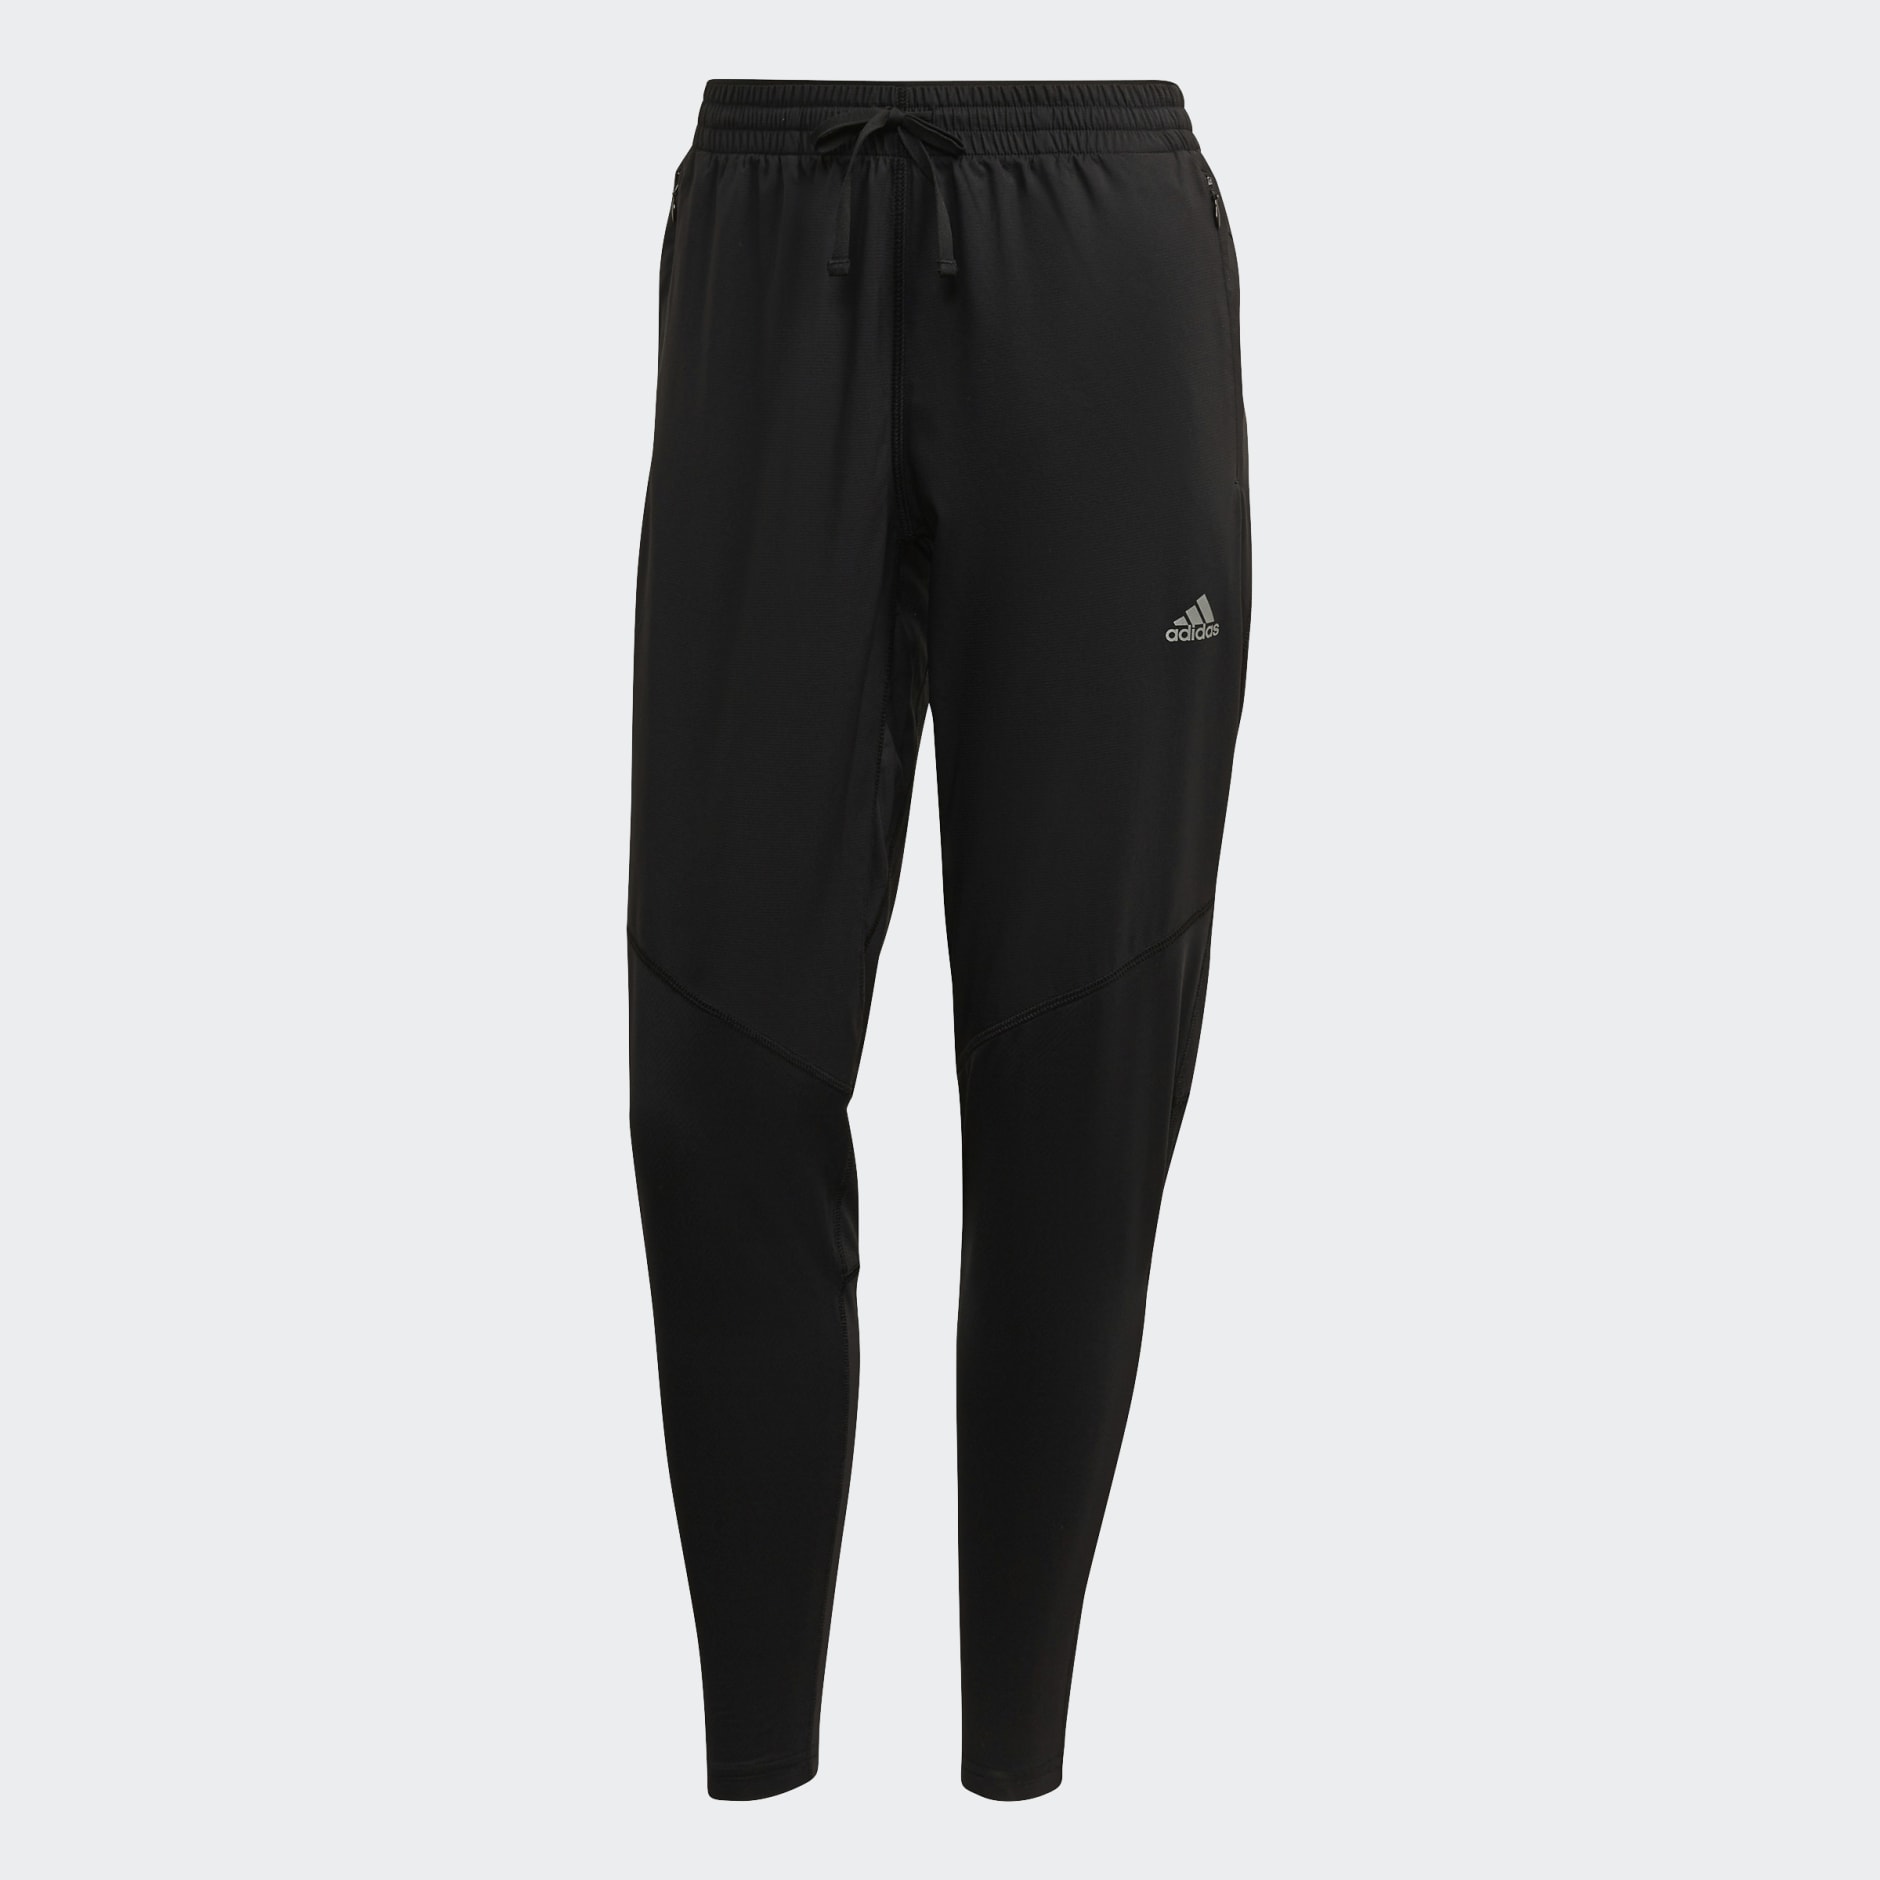 Adidas Women 3-Stripe SJ Running Pants Black Yoga Casual GYM Jersey GM5523  | eBay